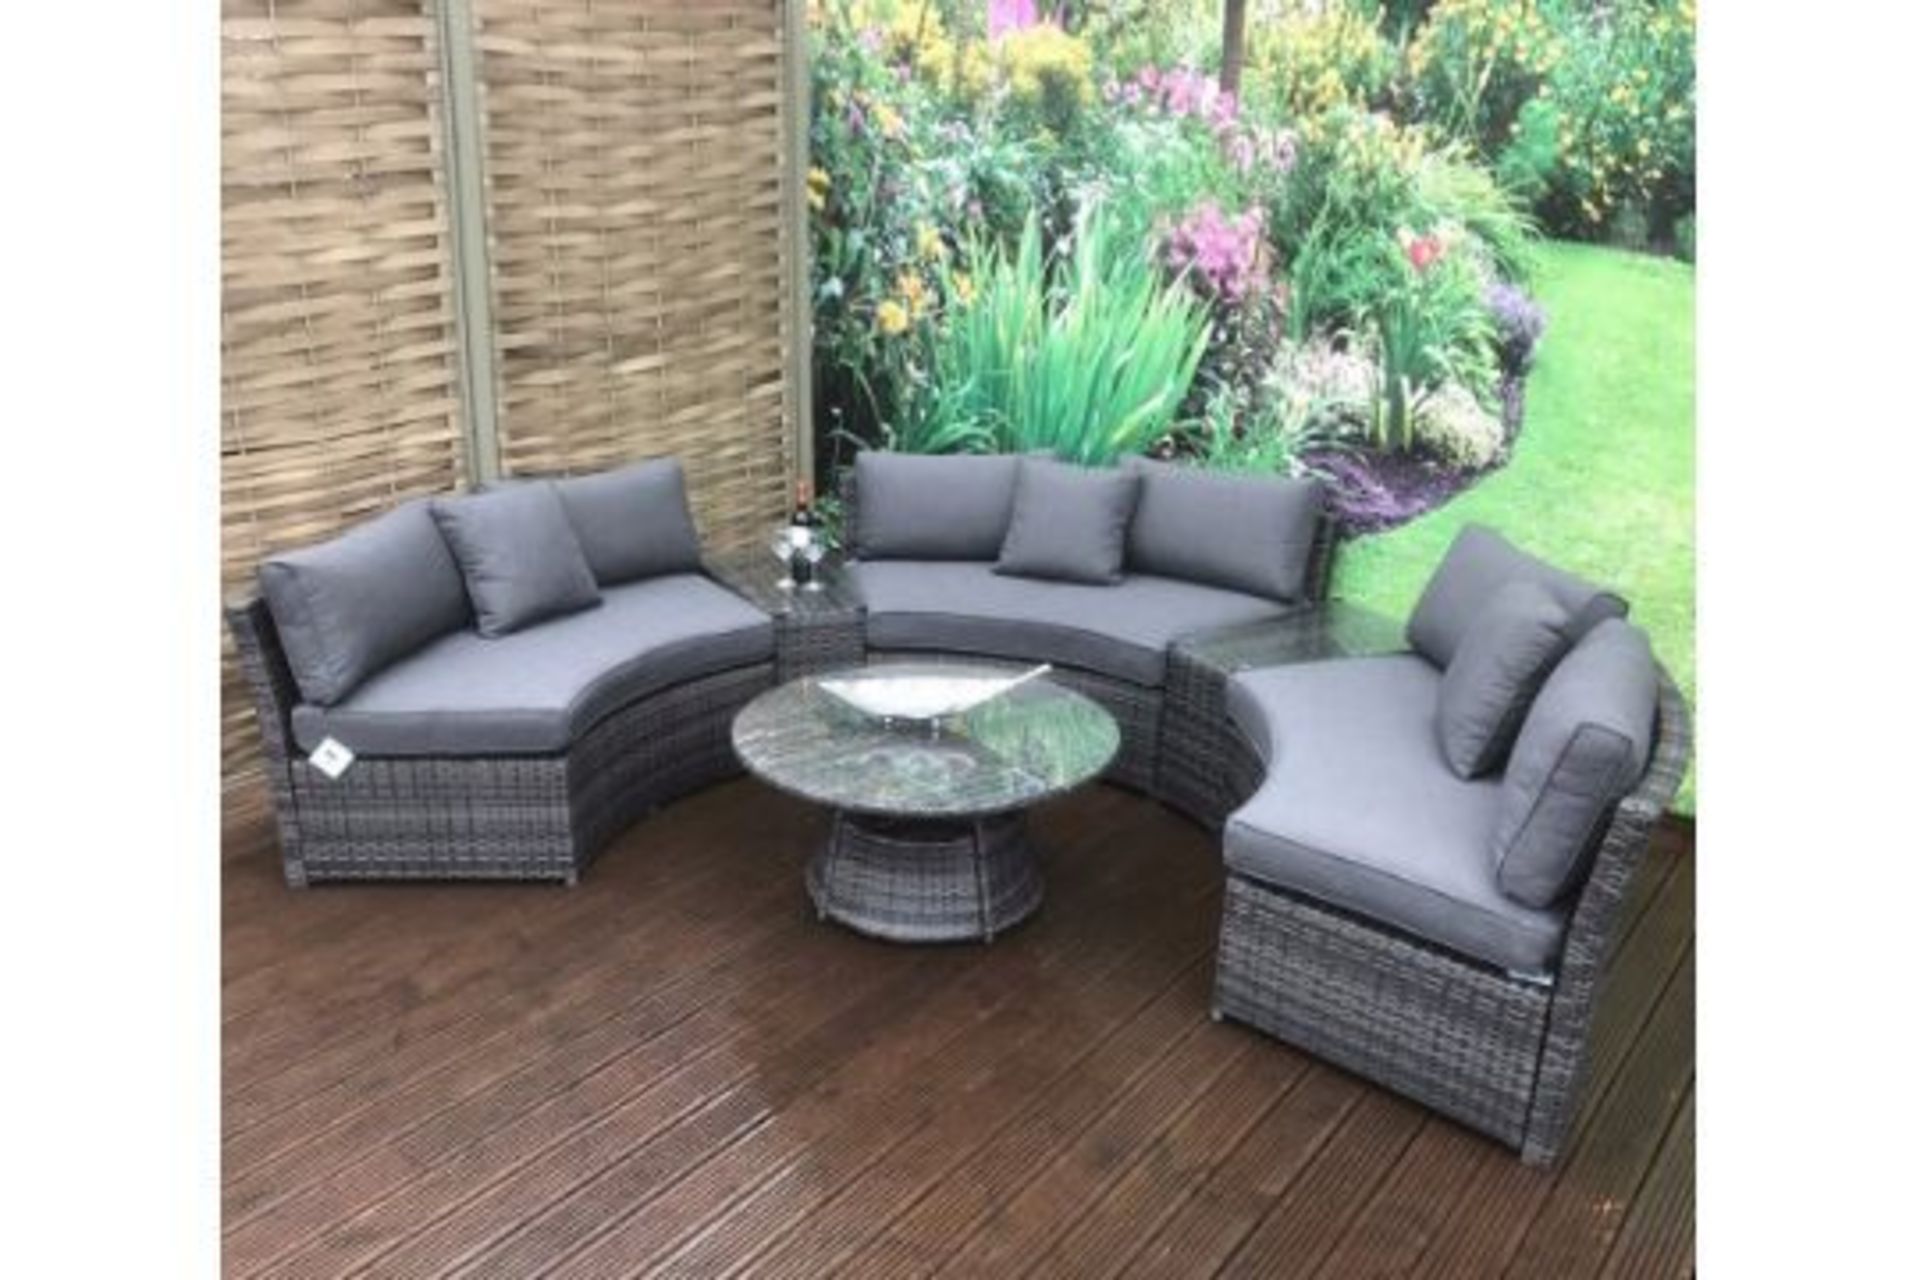 New & Boxed Luxury Signature Weave Garden Furniture - Juliet Grey Half Moon Sofa Set. RRP £2,999. - Image 2 of 3